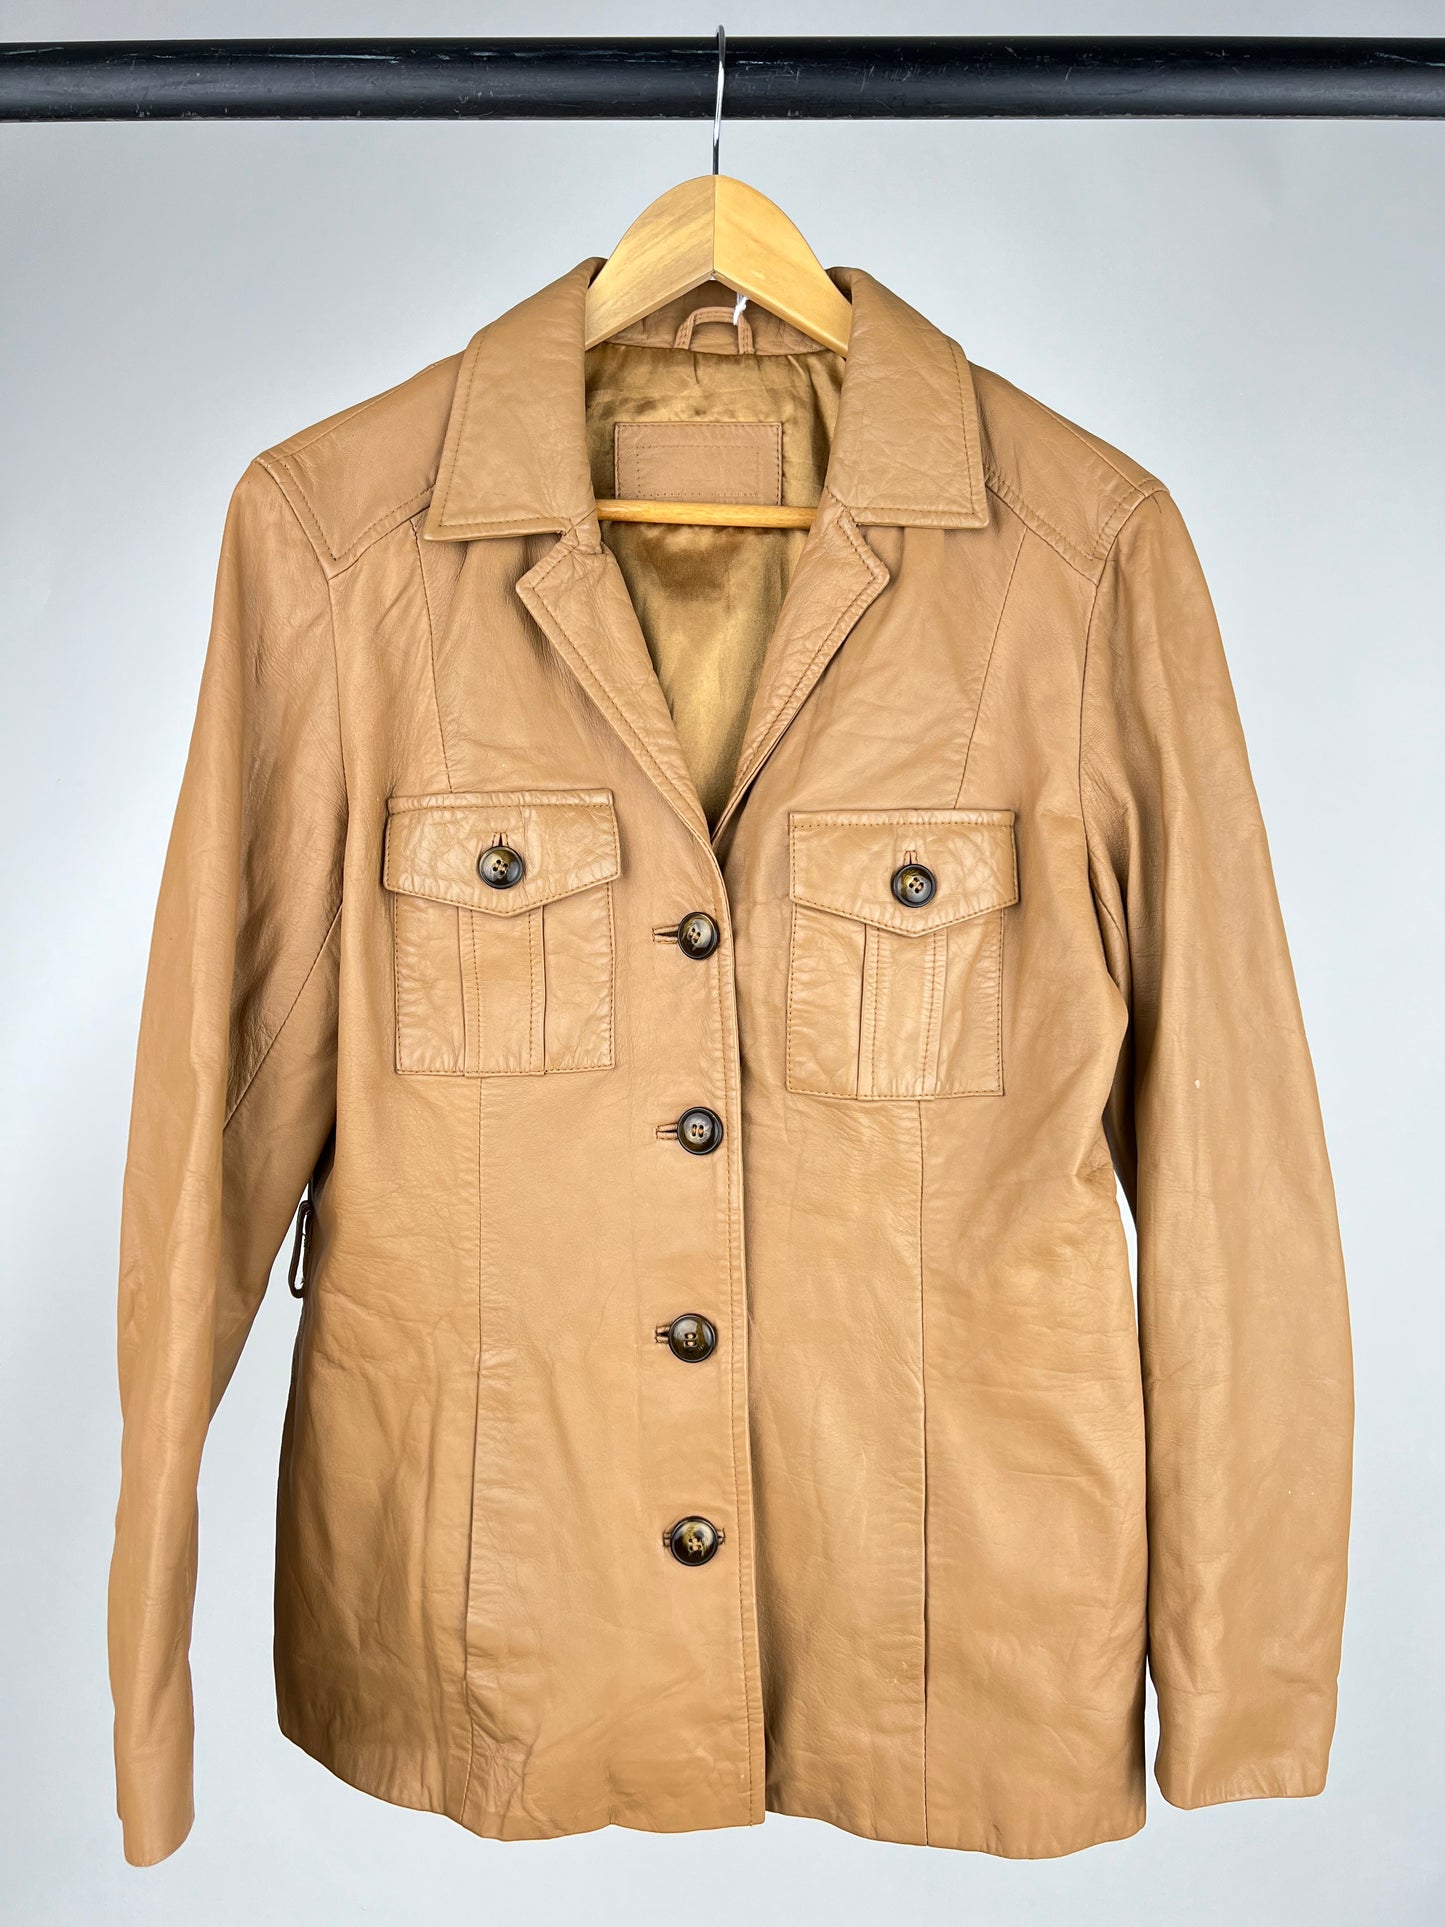 Vintage 90s Tan Leather Jacket